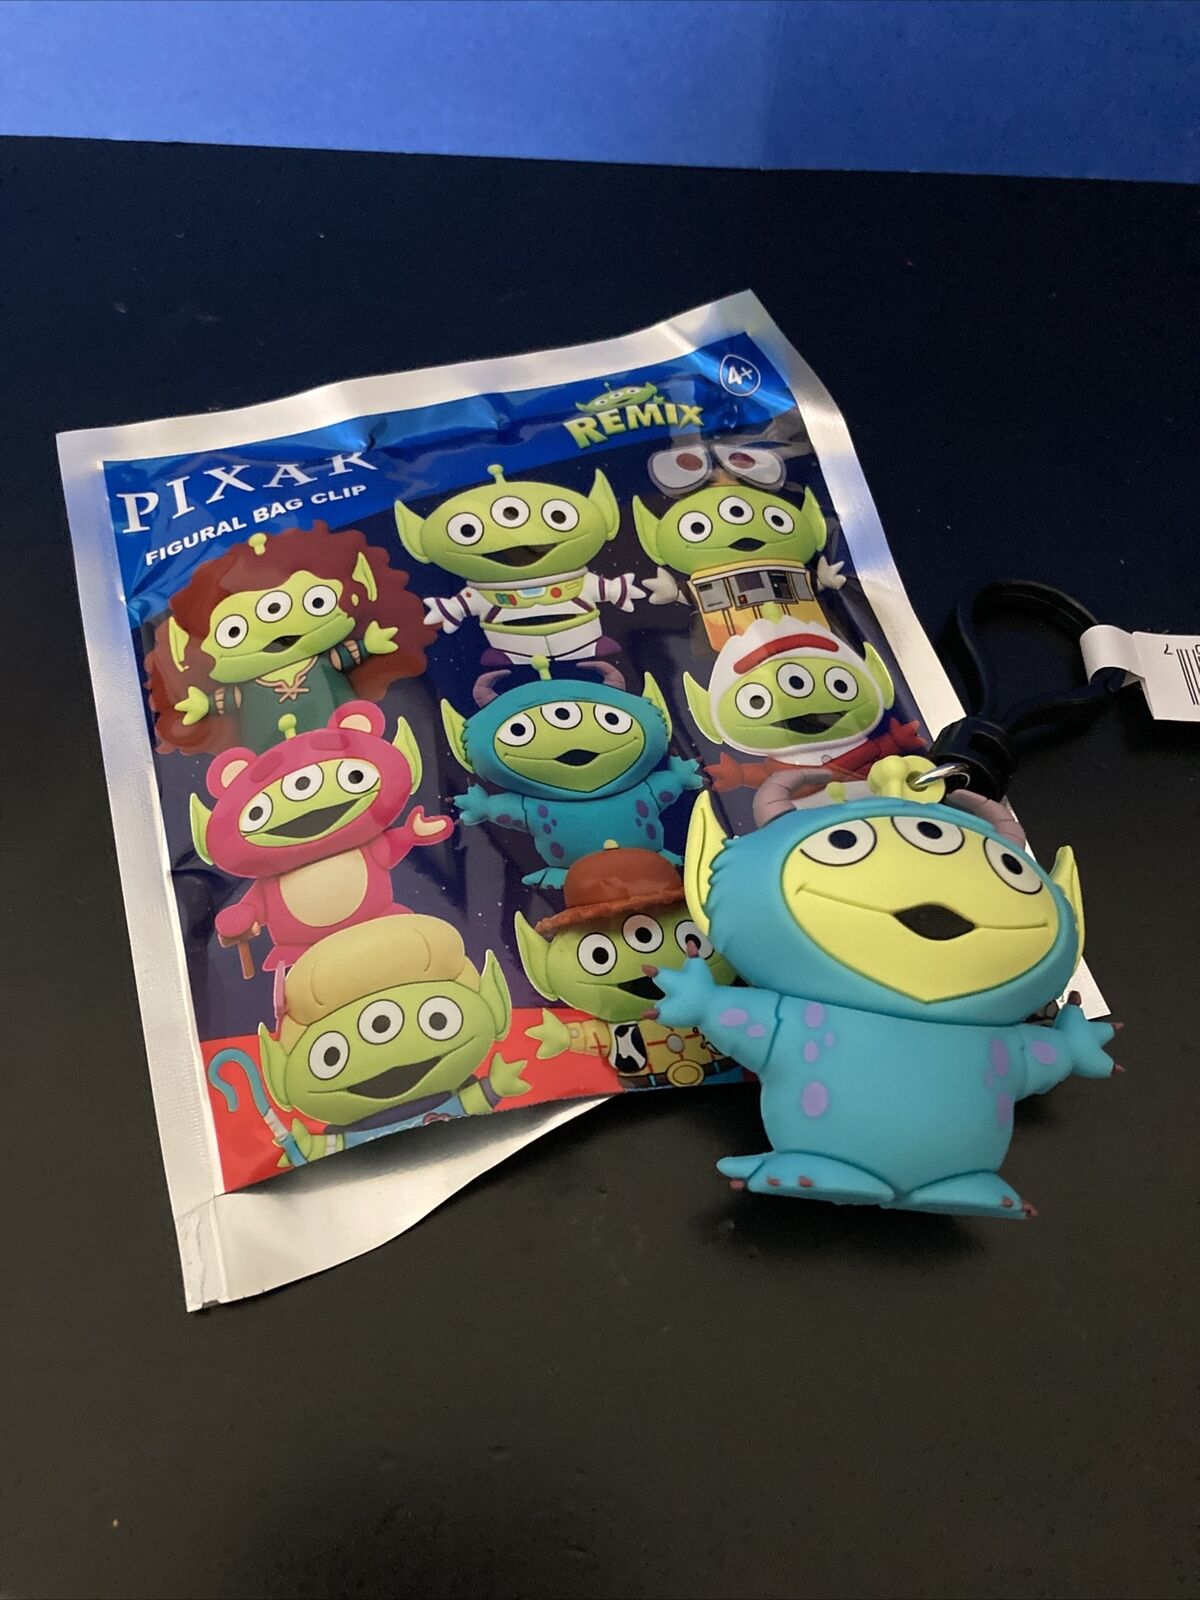 New Disney Pixar Alien Remix Figural Bag Clip Series As Sulley